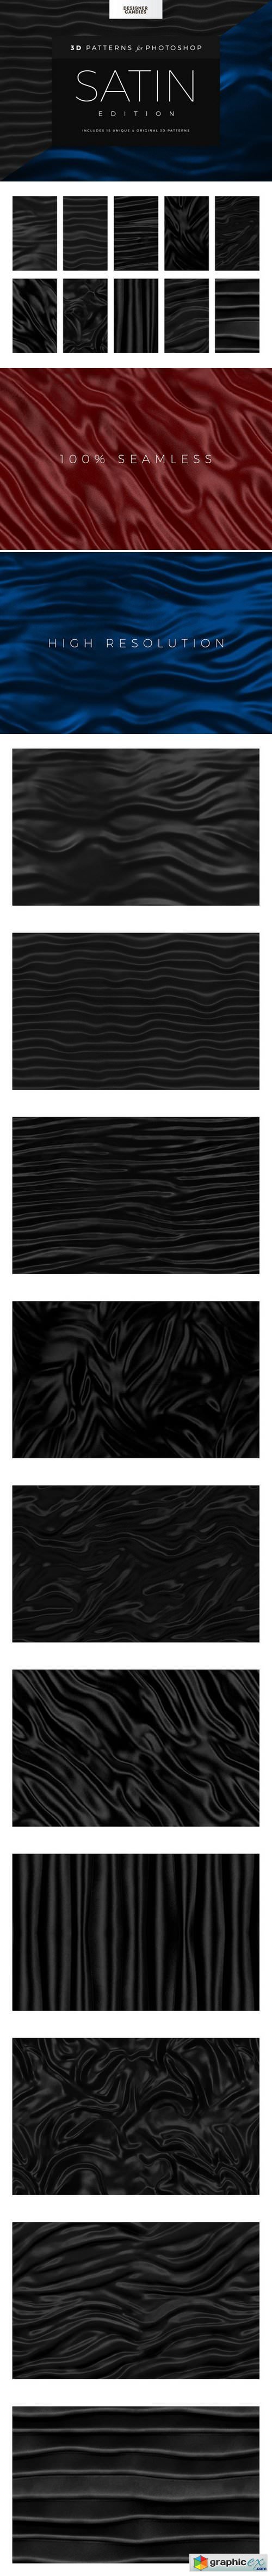 Seamless Silk/Satin Fabric Patterns